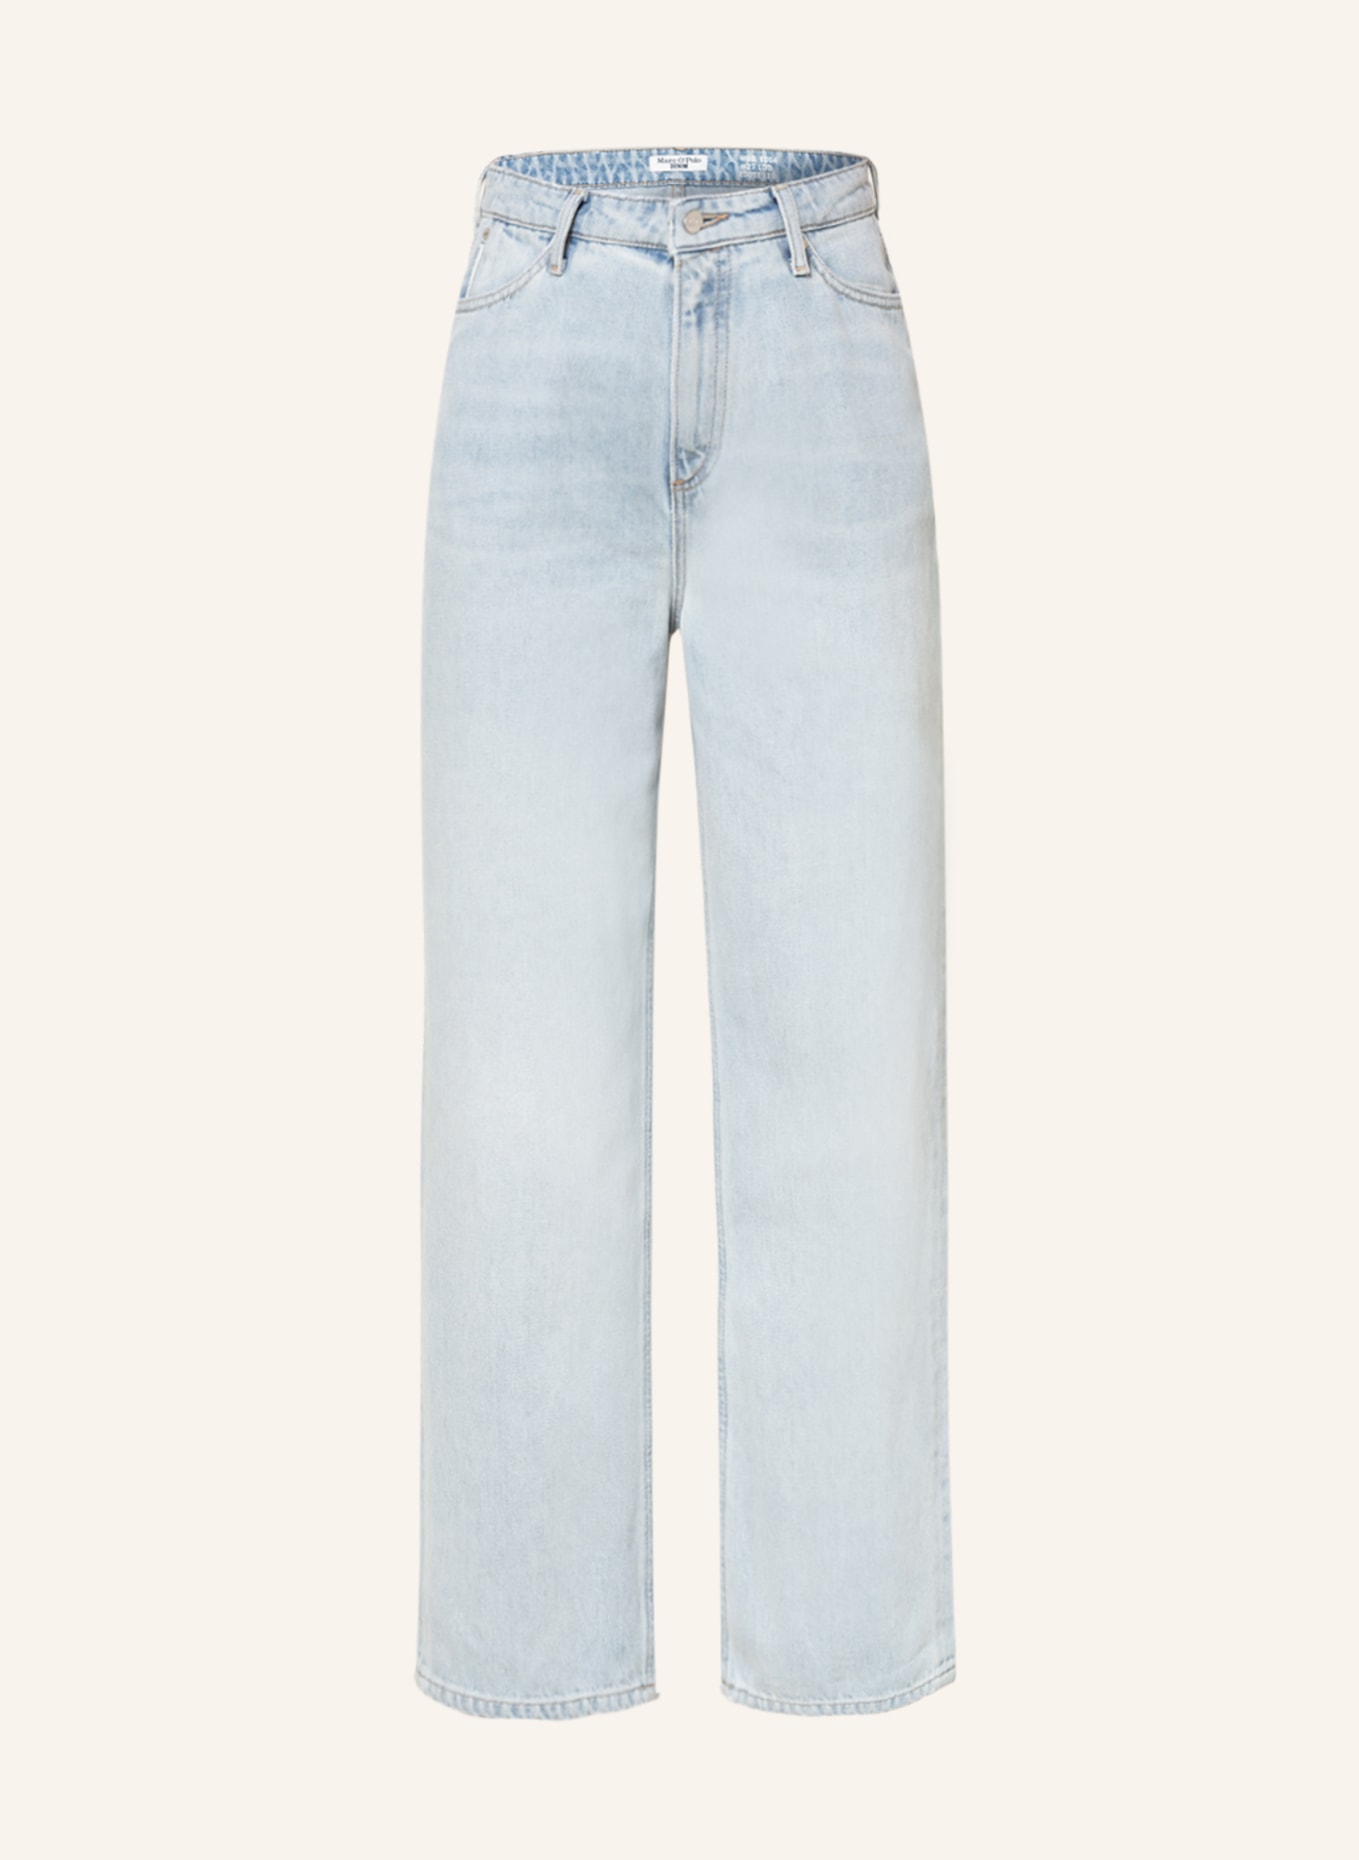 Marc O'Polo DENIM Jeans, Farbe: P31 multi/vintage light blue (Bild 1)